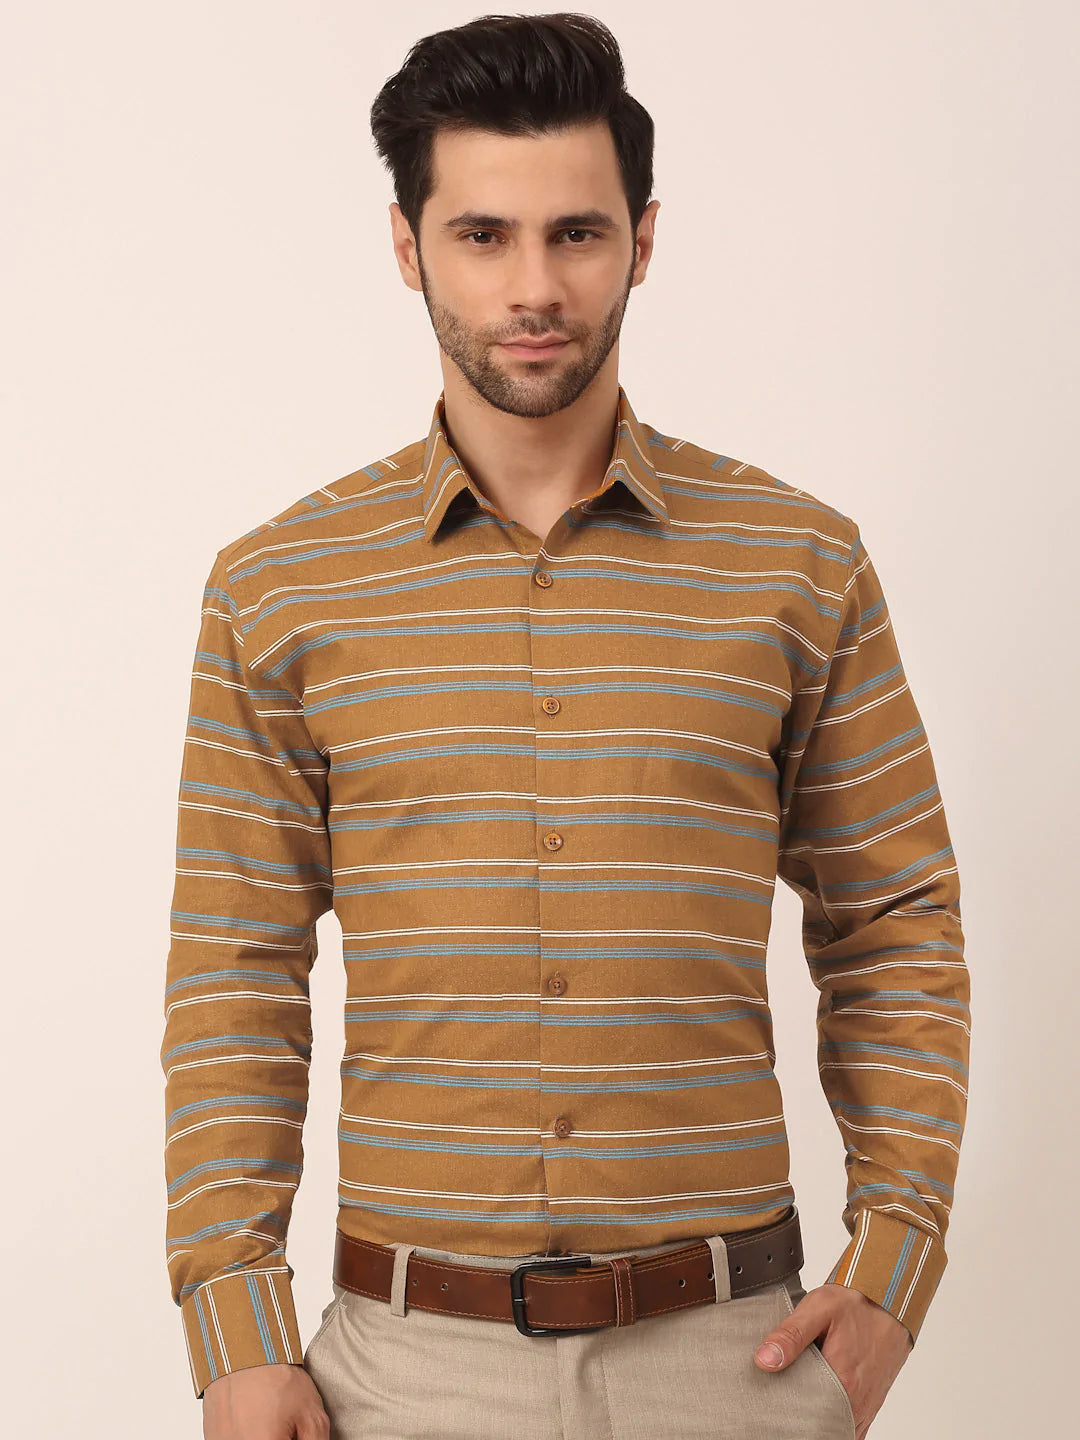 Jainish Men's  Cotton Striped Formal Shirts ( SF 820Mustard )